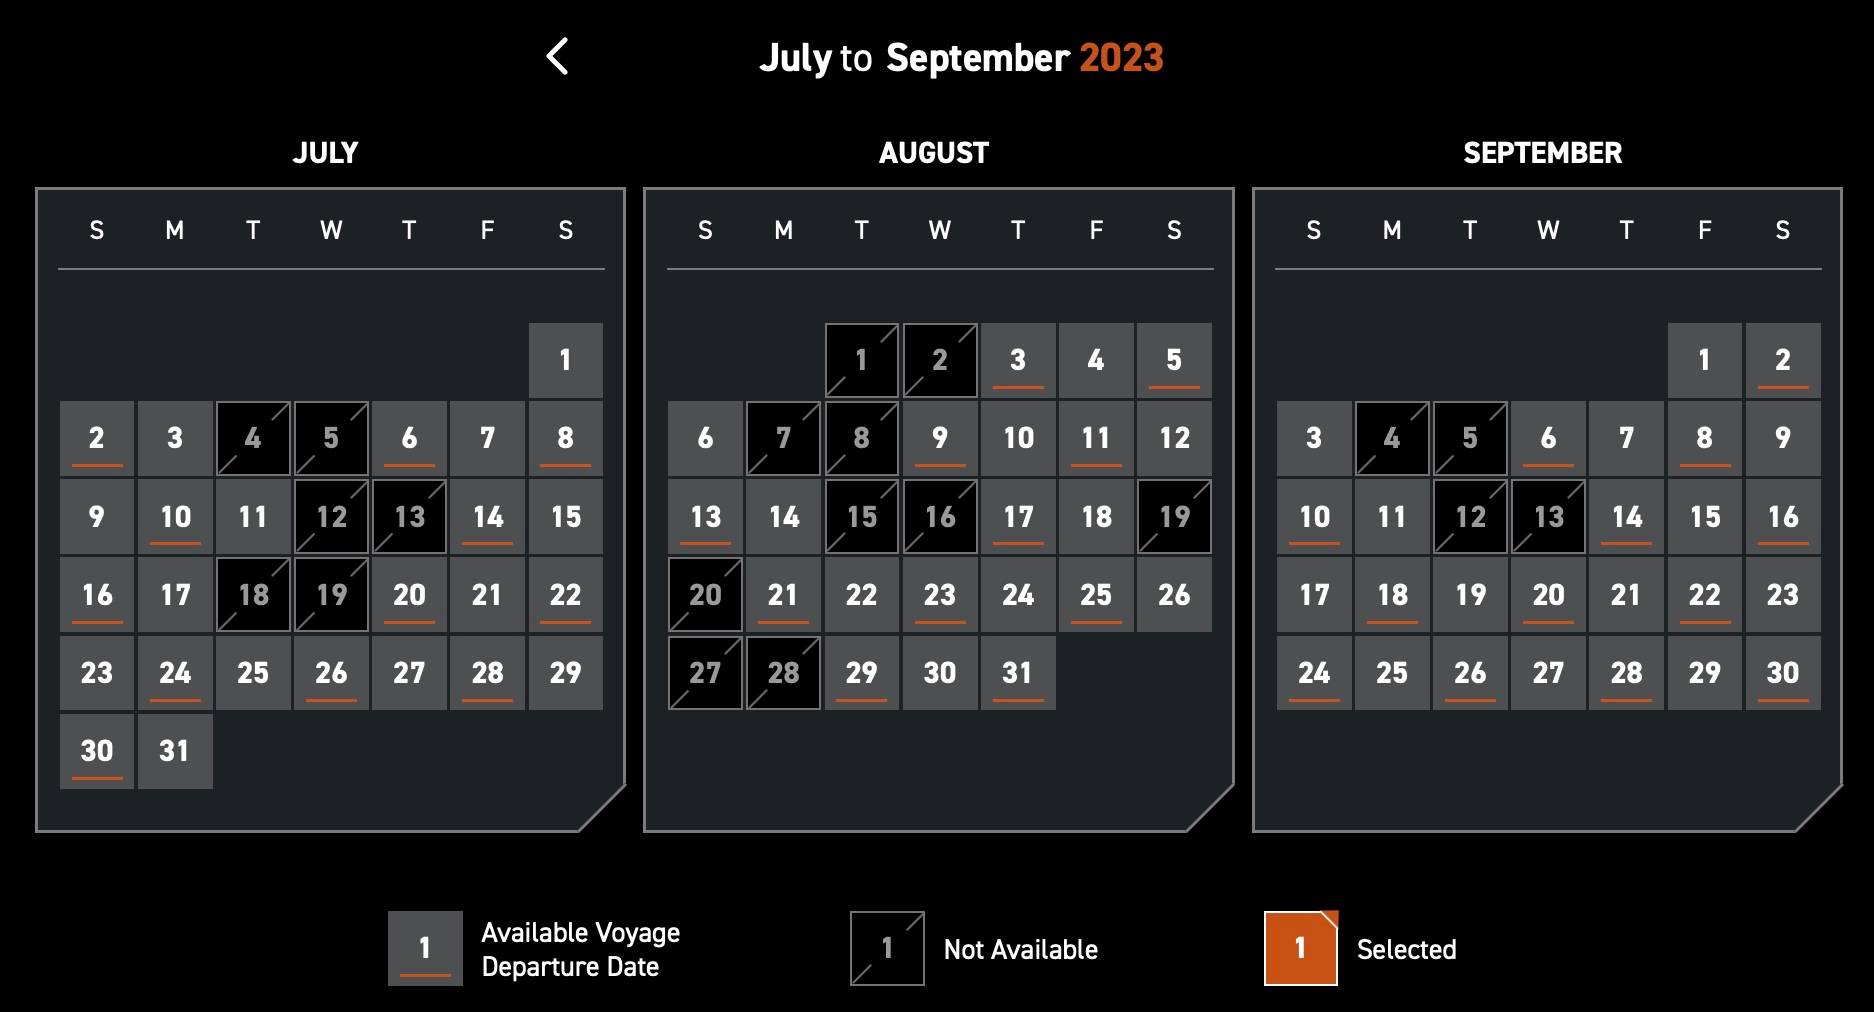 Star Wars Galactic Starcruiser July through September 2023 availability calendar